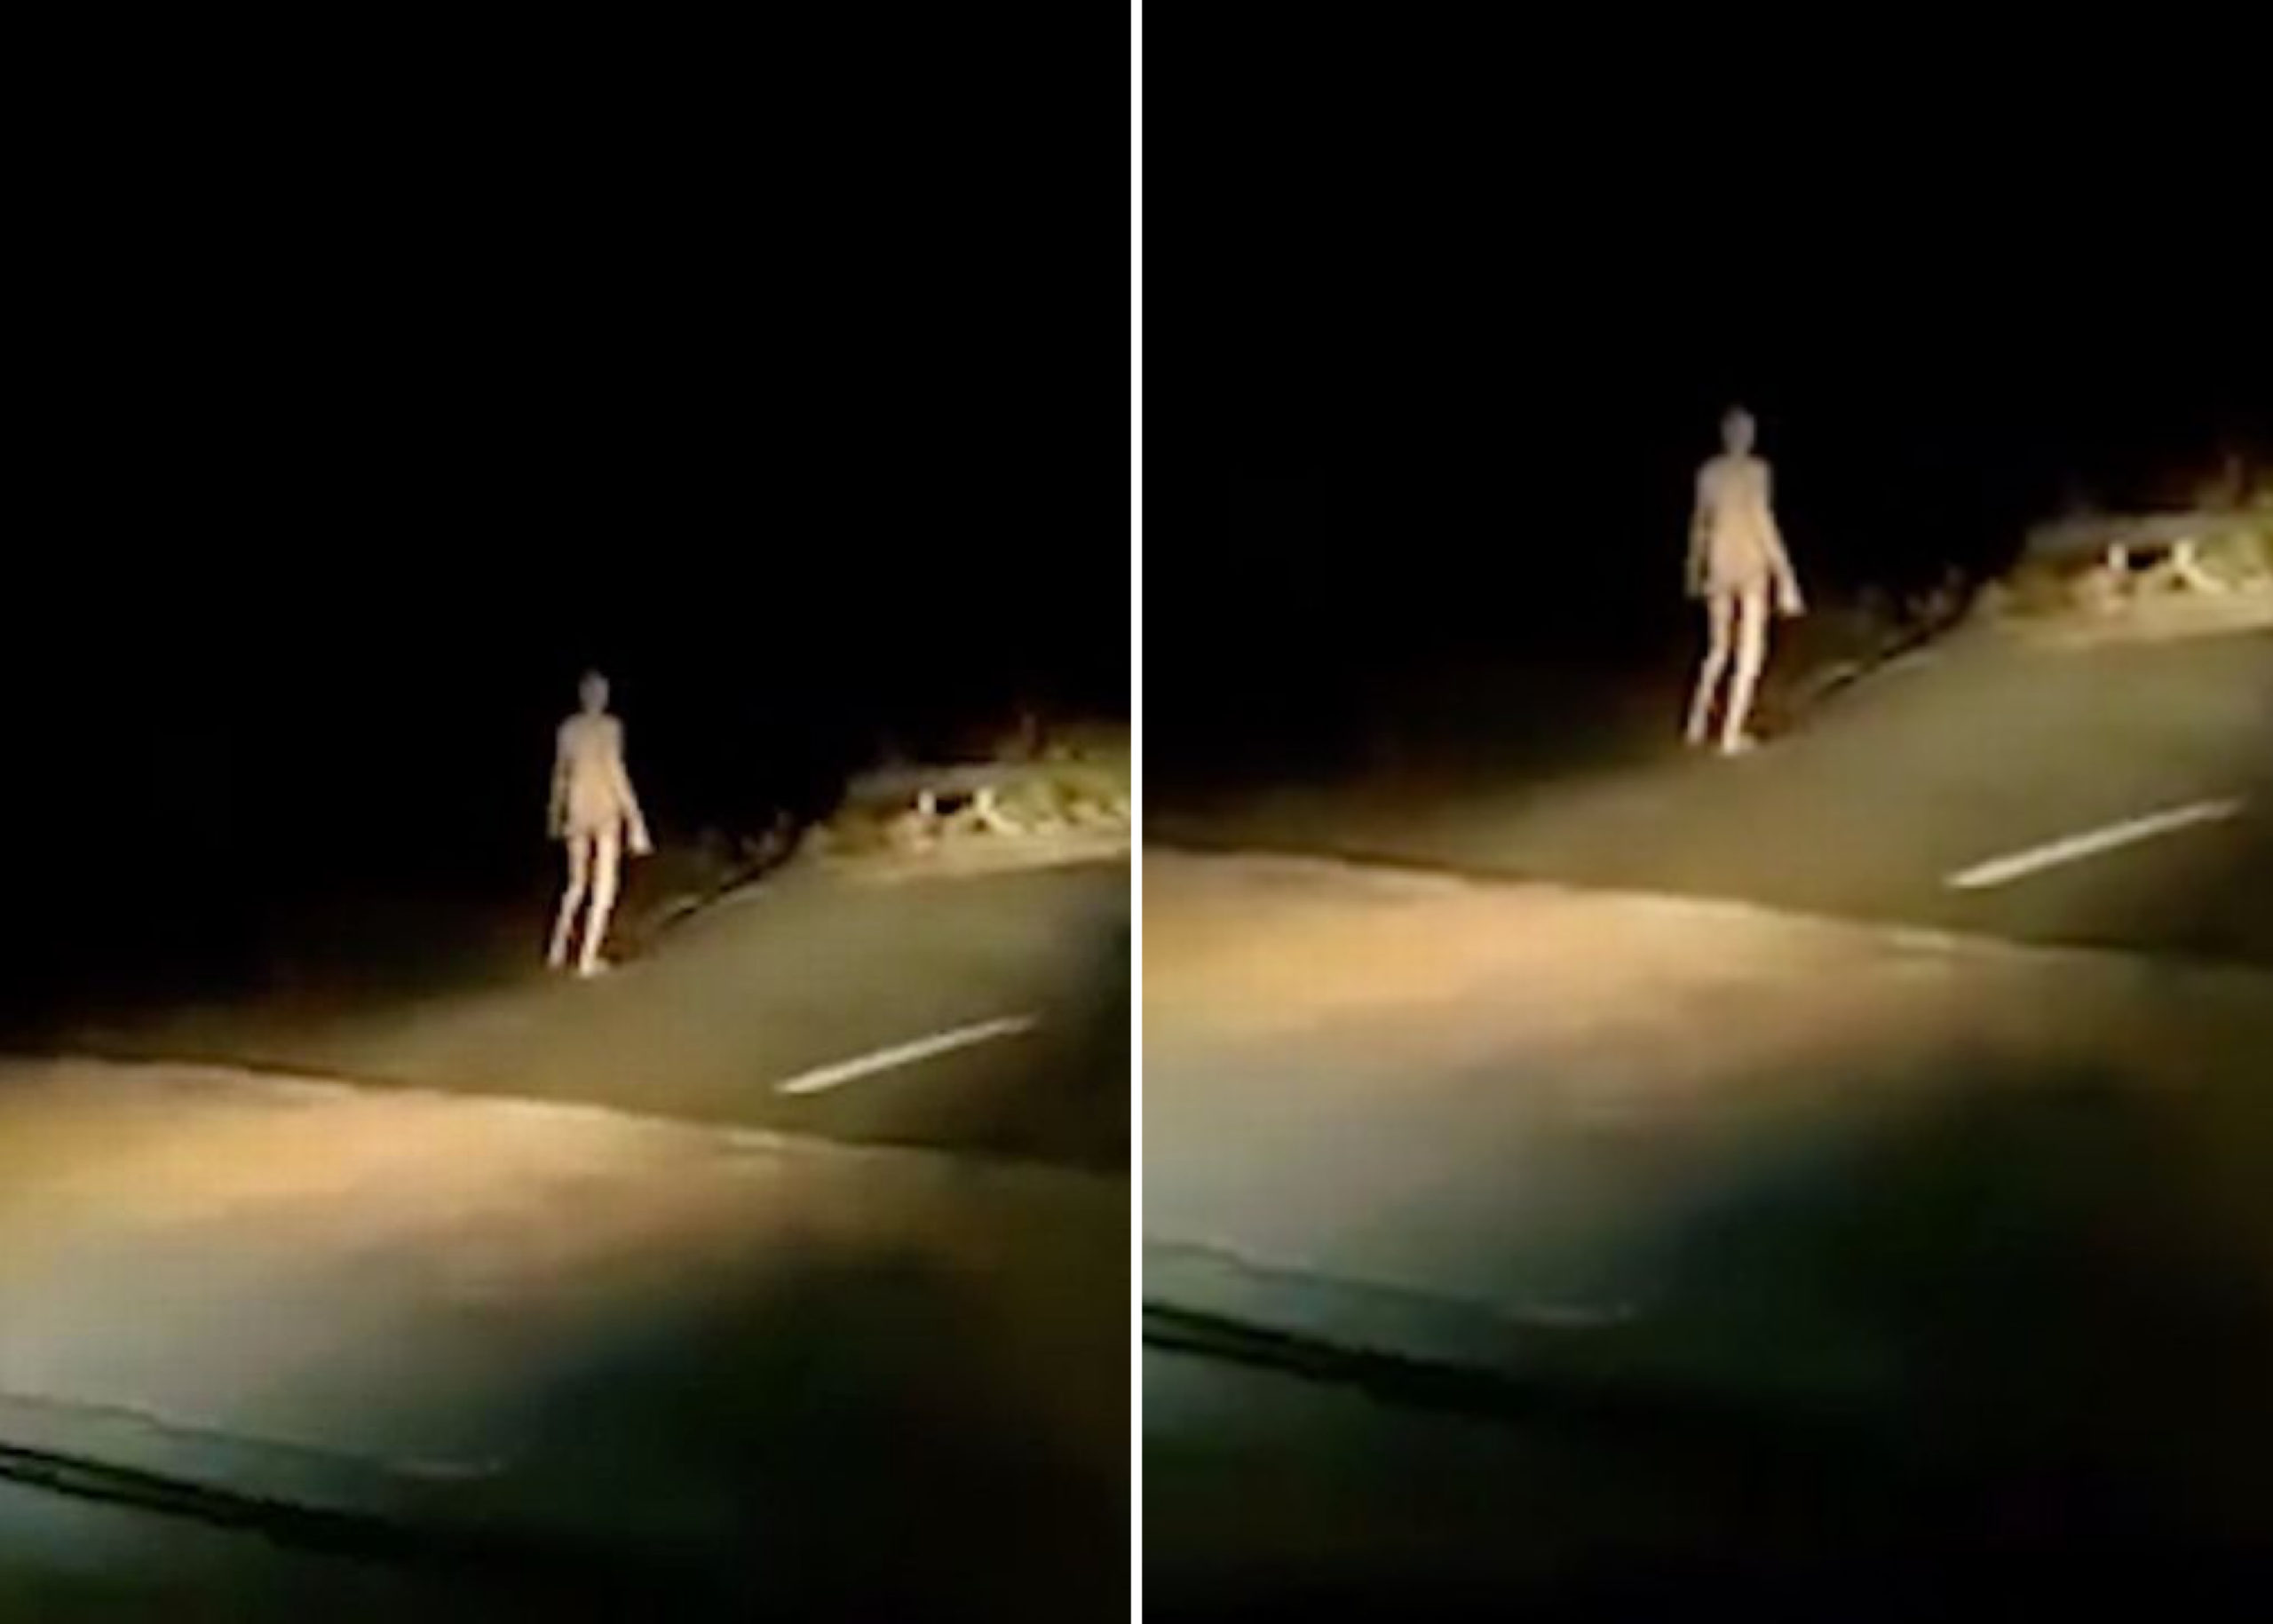 Strange 'Alien' Figure With Long Limbs, Pale Skin Seen Walking Along Bridge In The Middle Of The Night